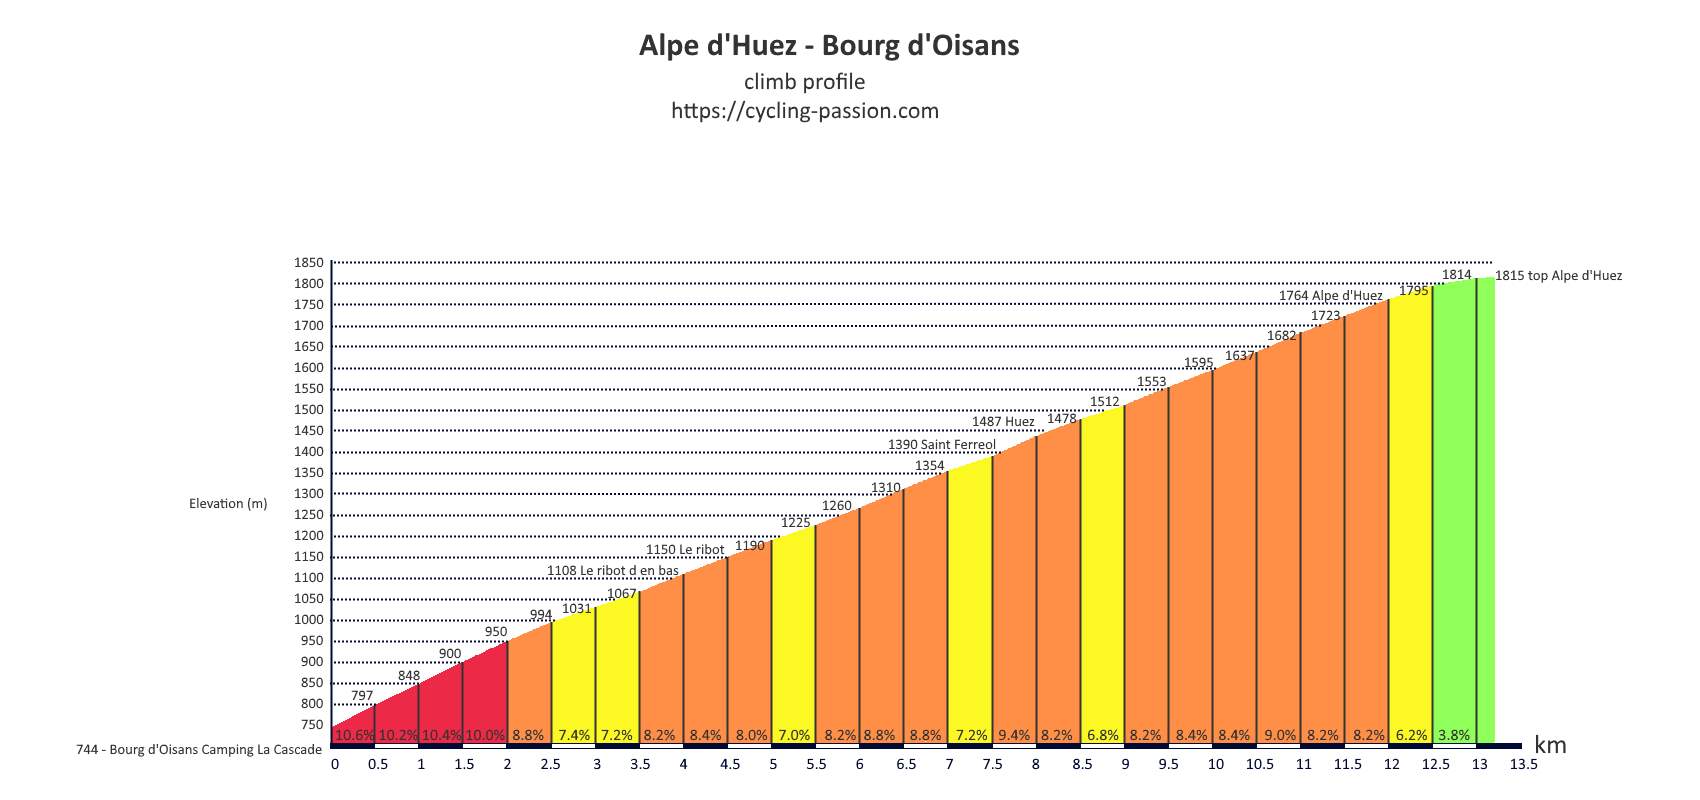 Alpe d'Huez climb profile